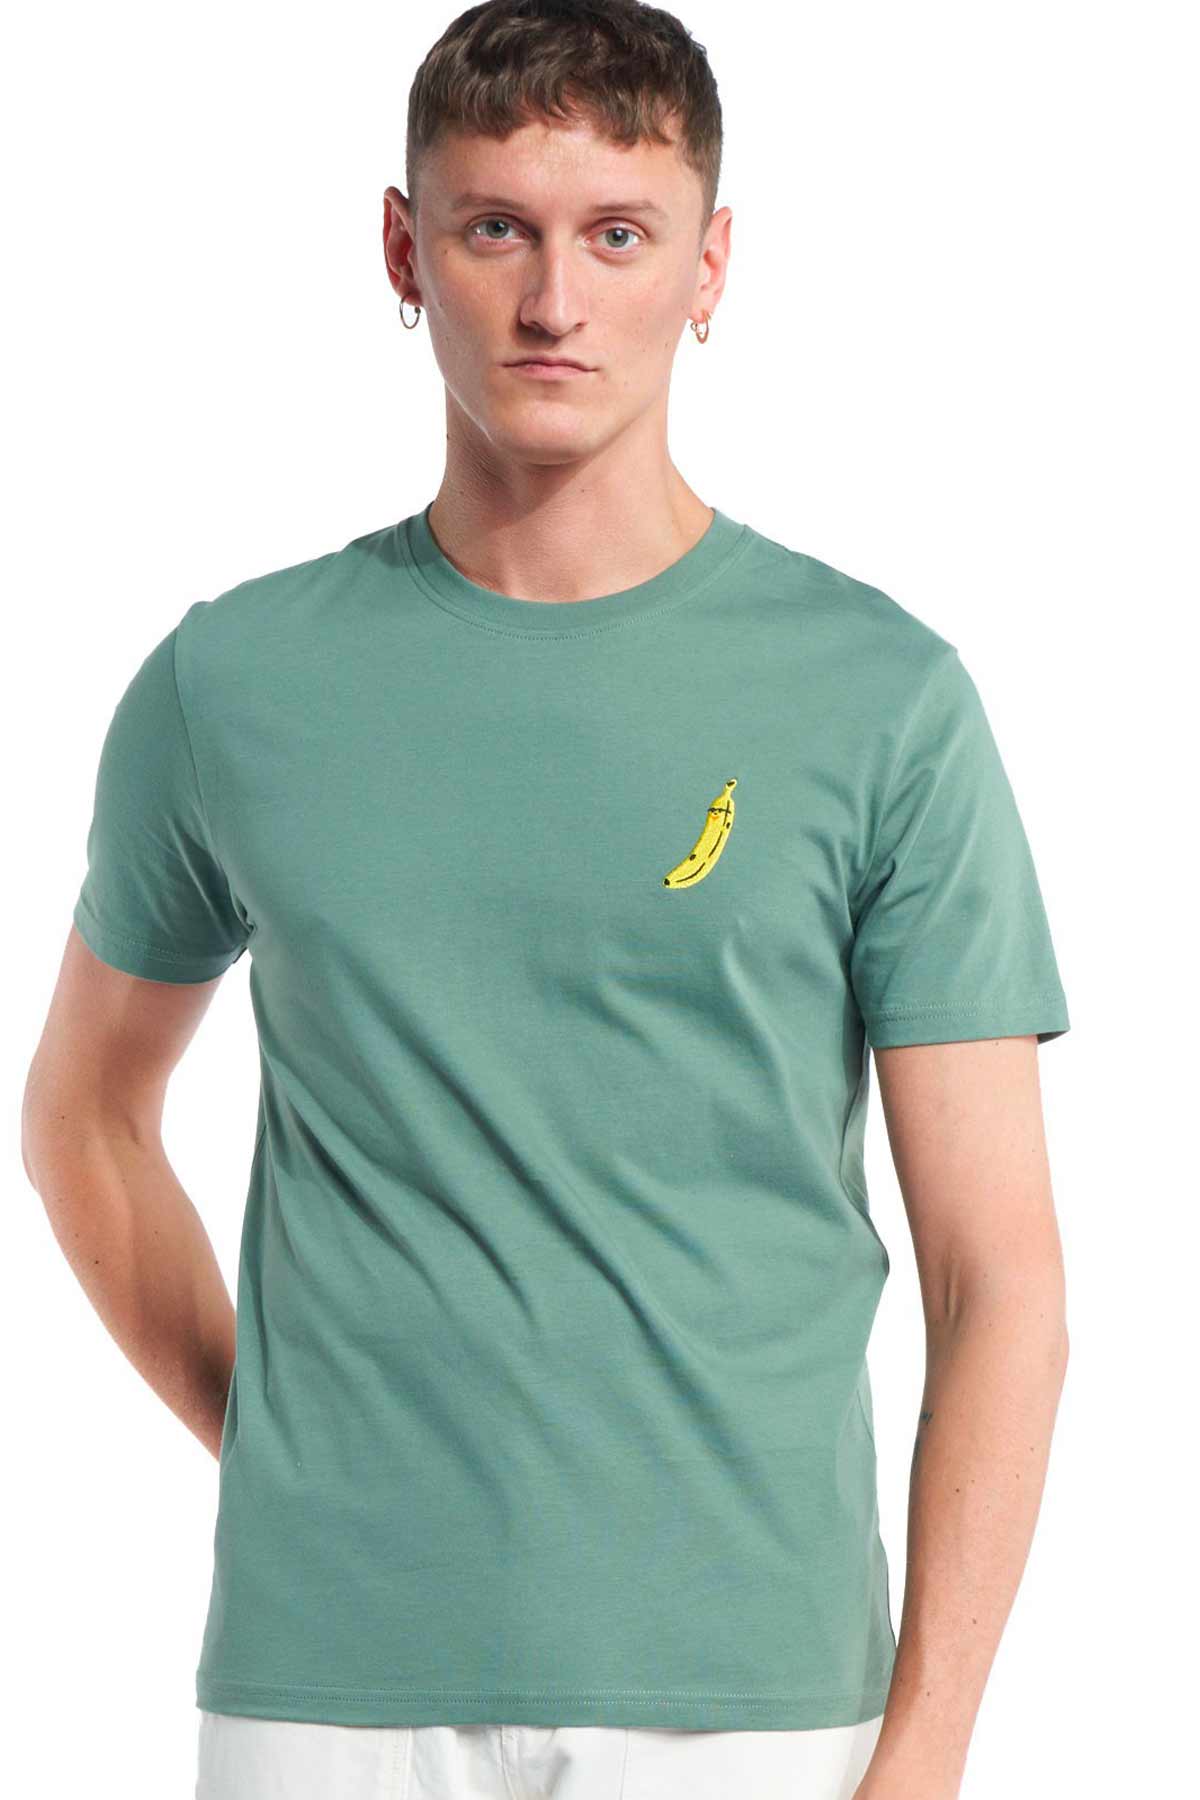 T-shirt Banana Chill - Olow